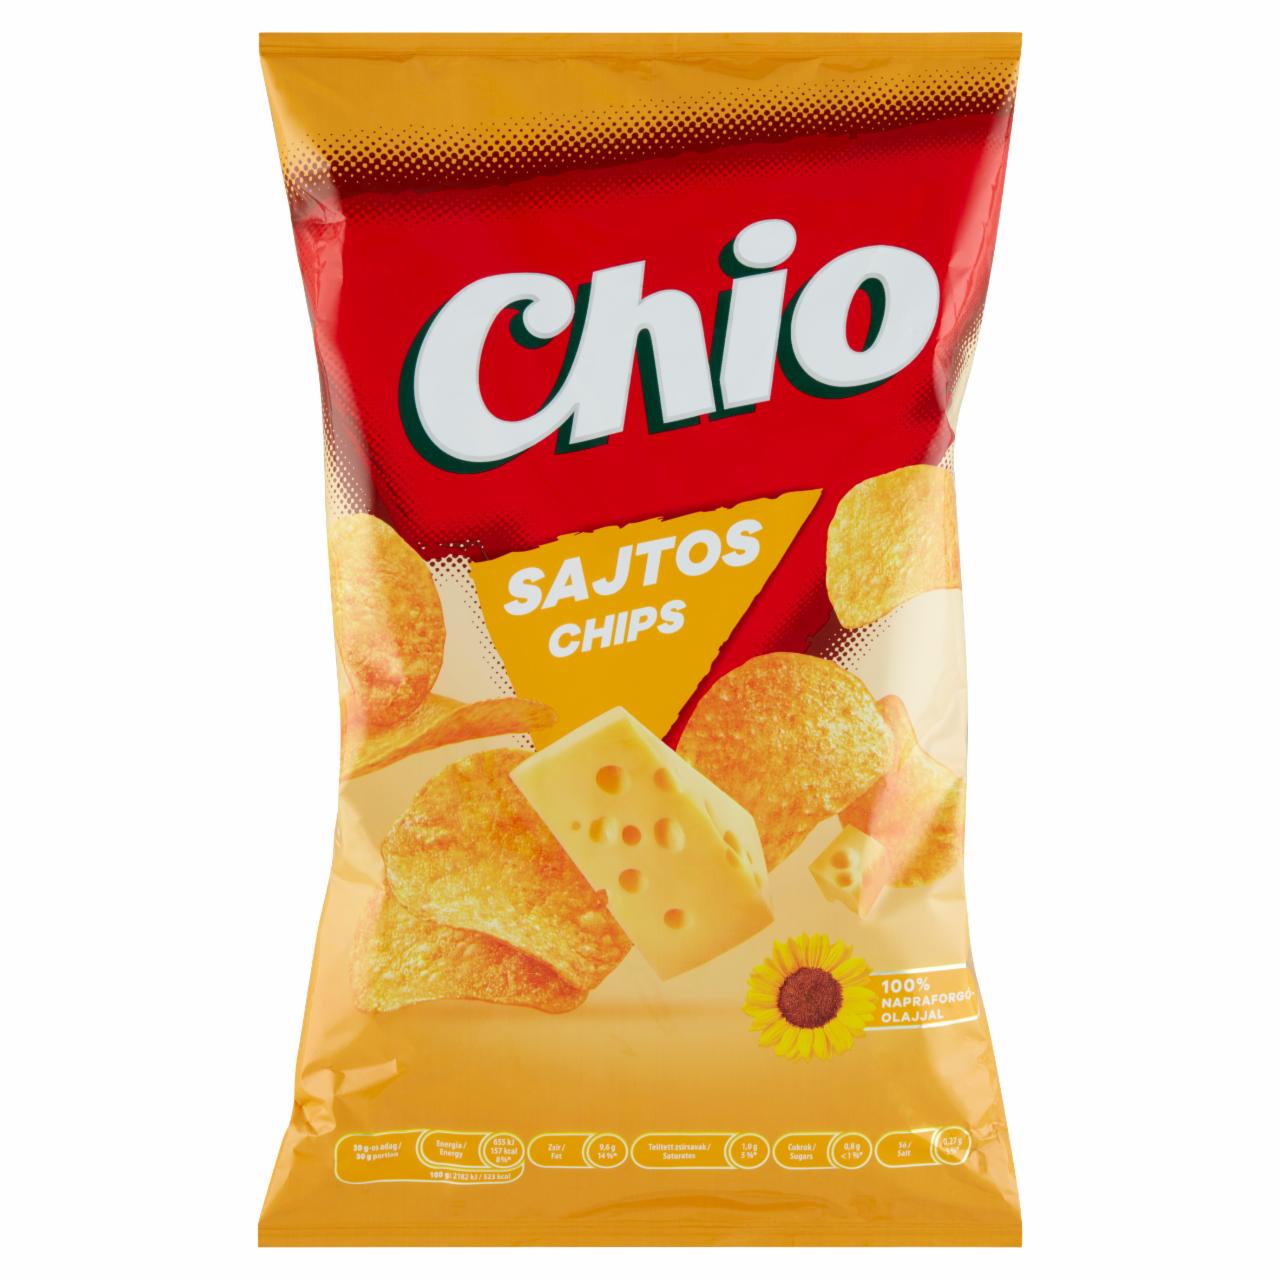 Képek - Chio sajtos chips 140 g